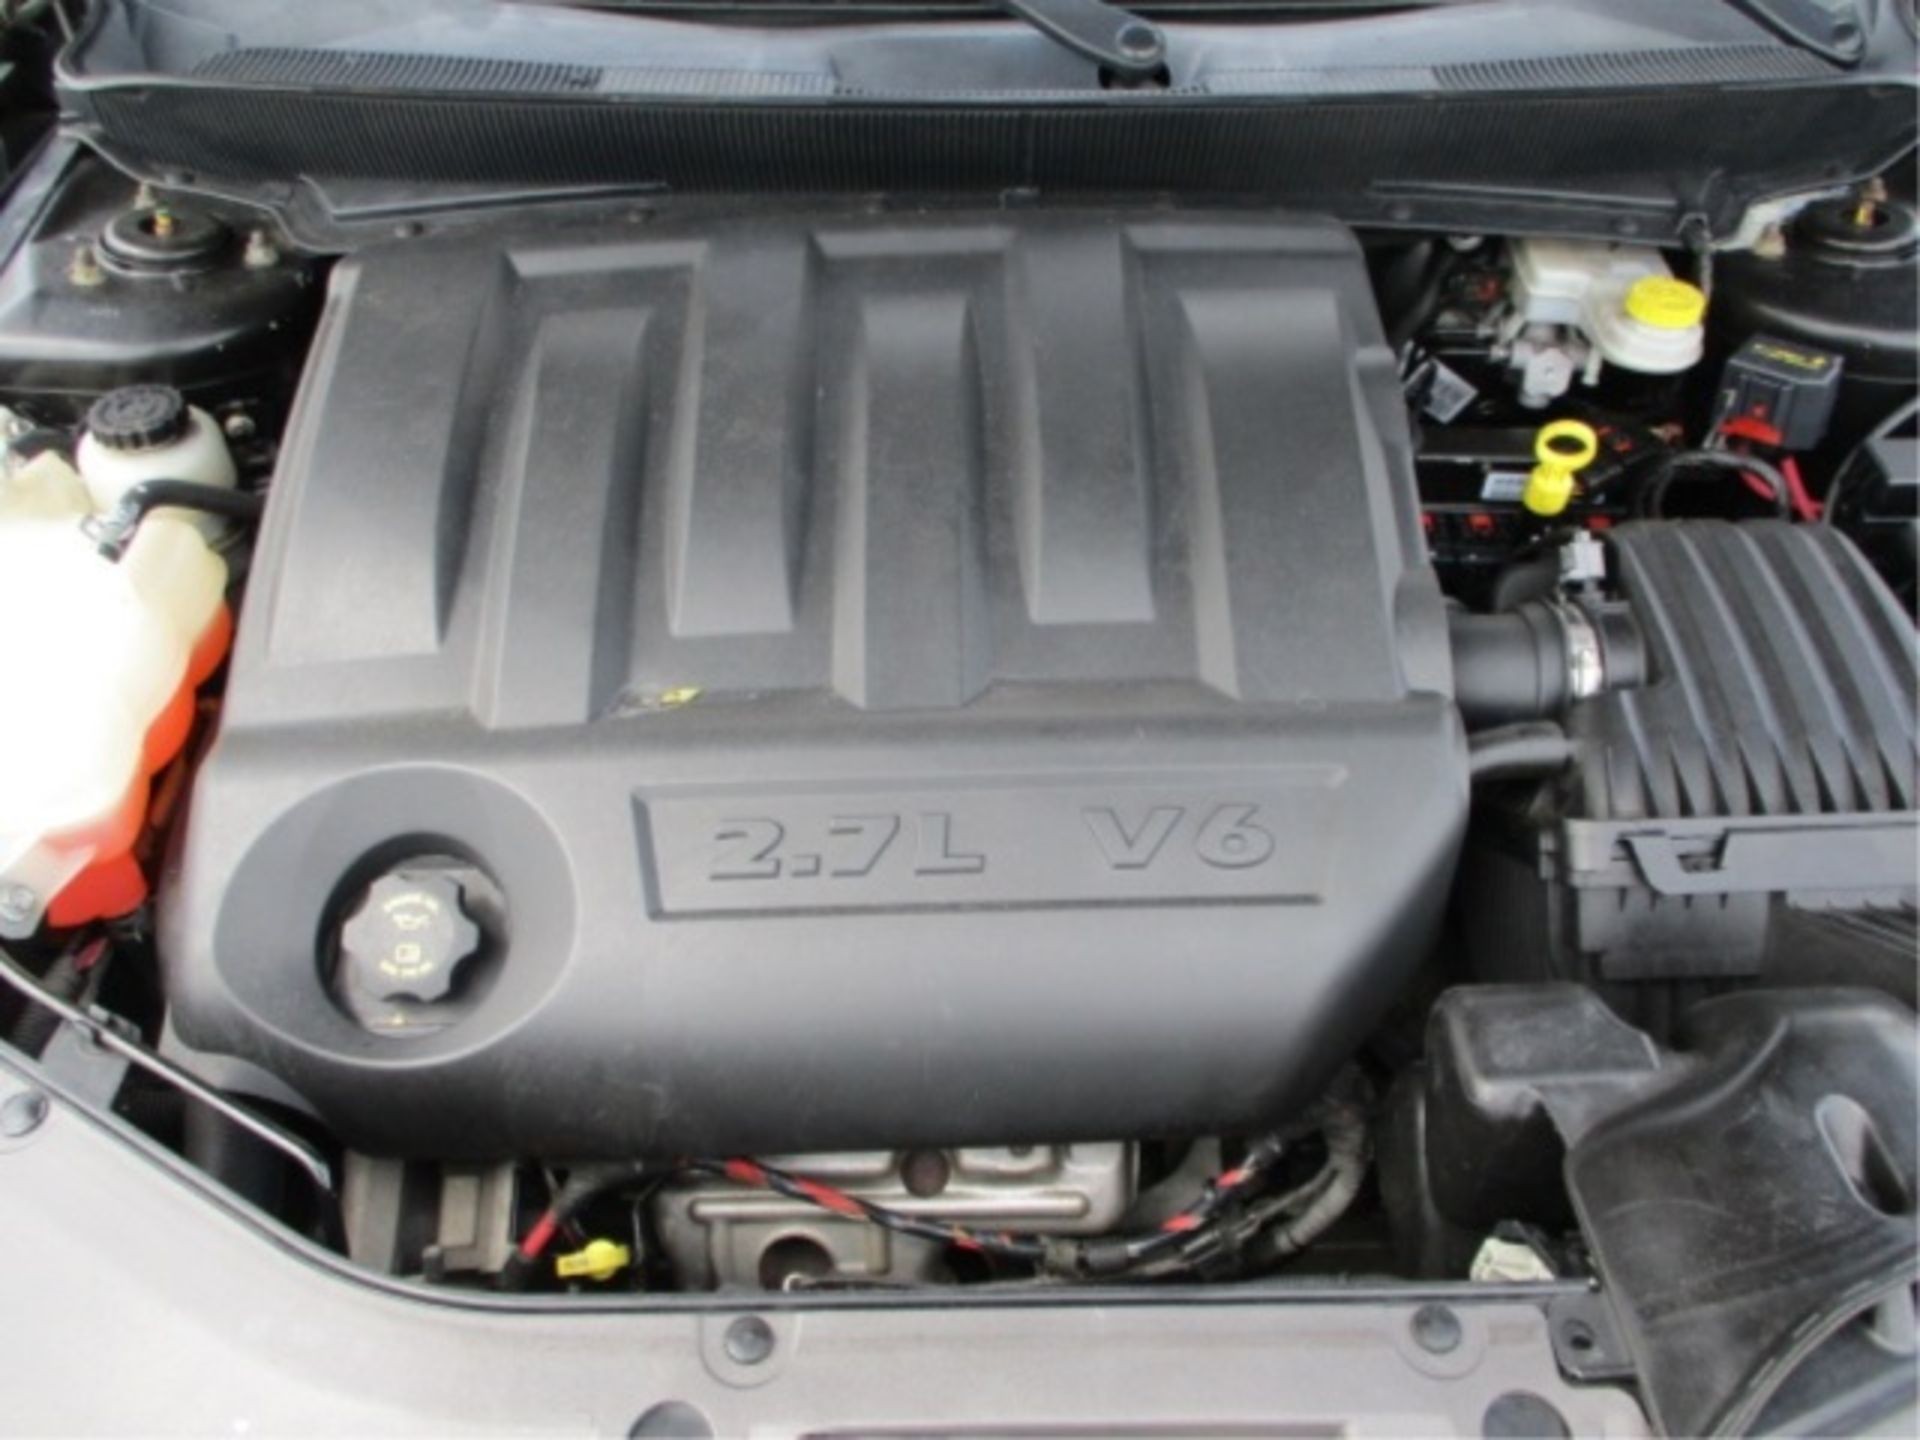 2007 Chrysler Sebring Sedan, 2.7L V6 Gas, Automatic, S/N: 1C3LC56R17N524072, Miles/Hours - 137410 - Image 17 of 22